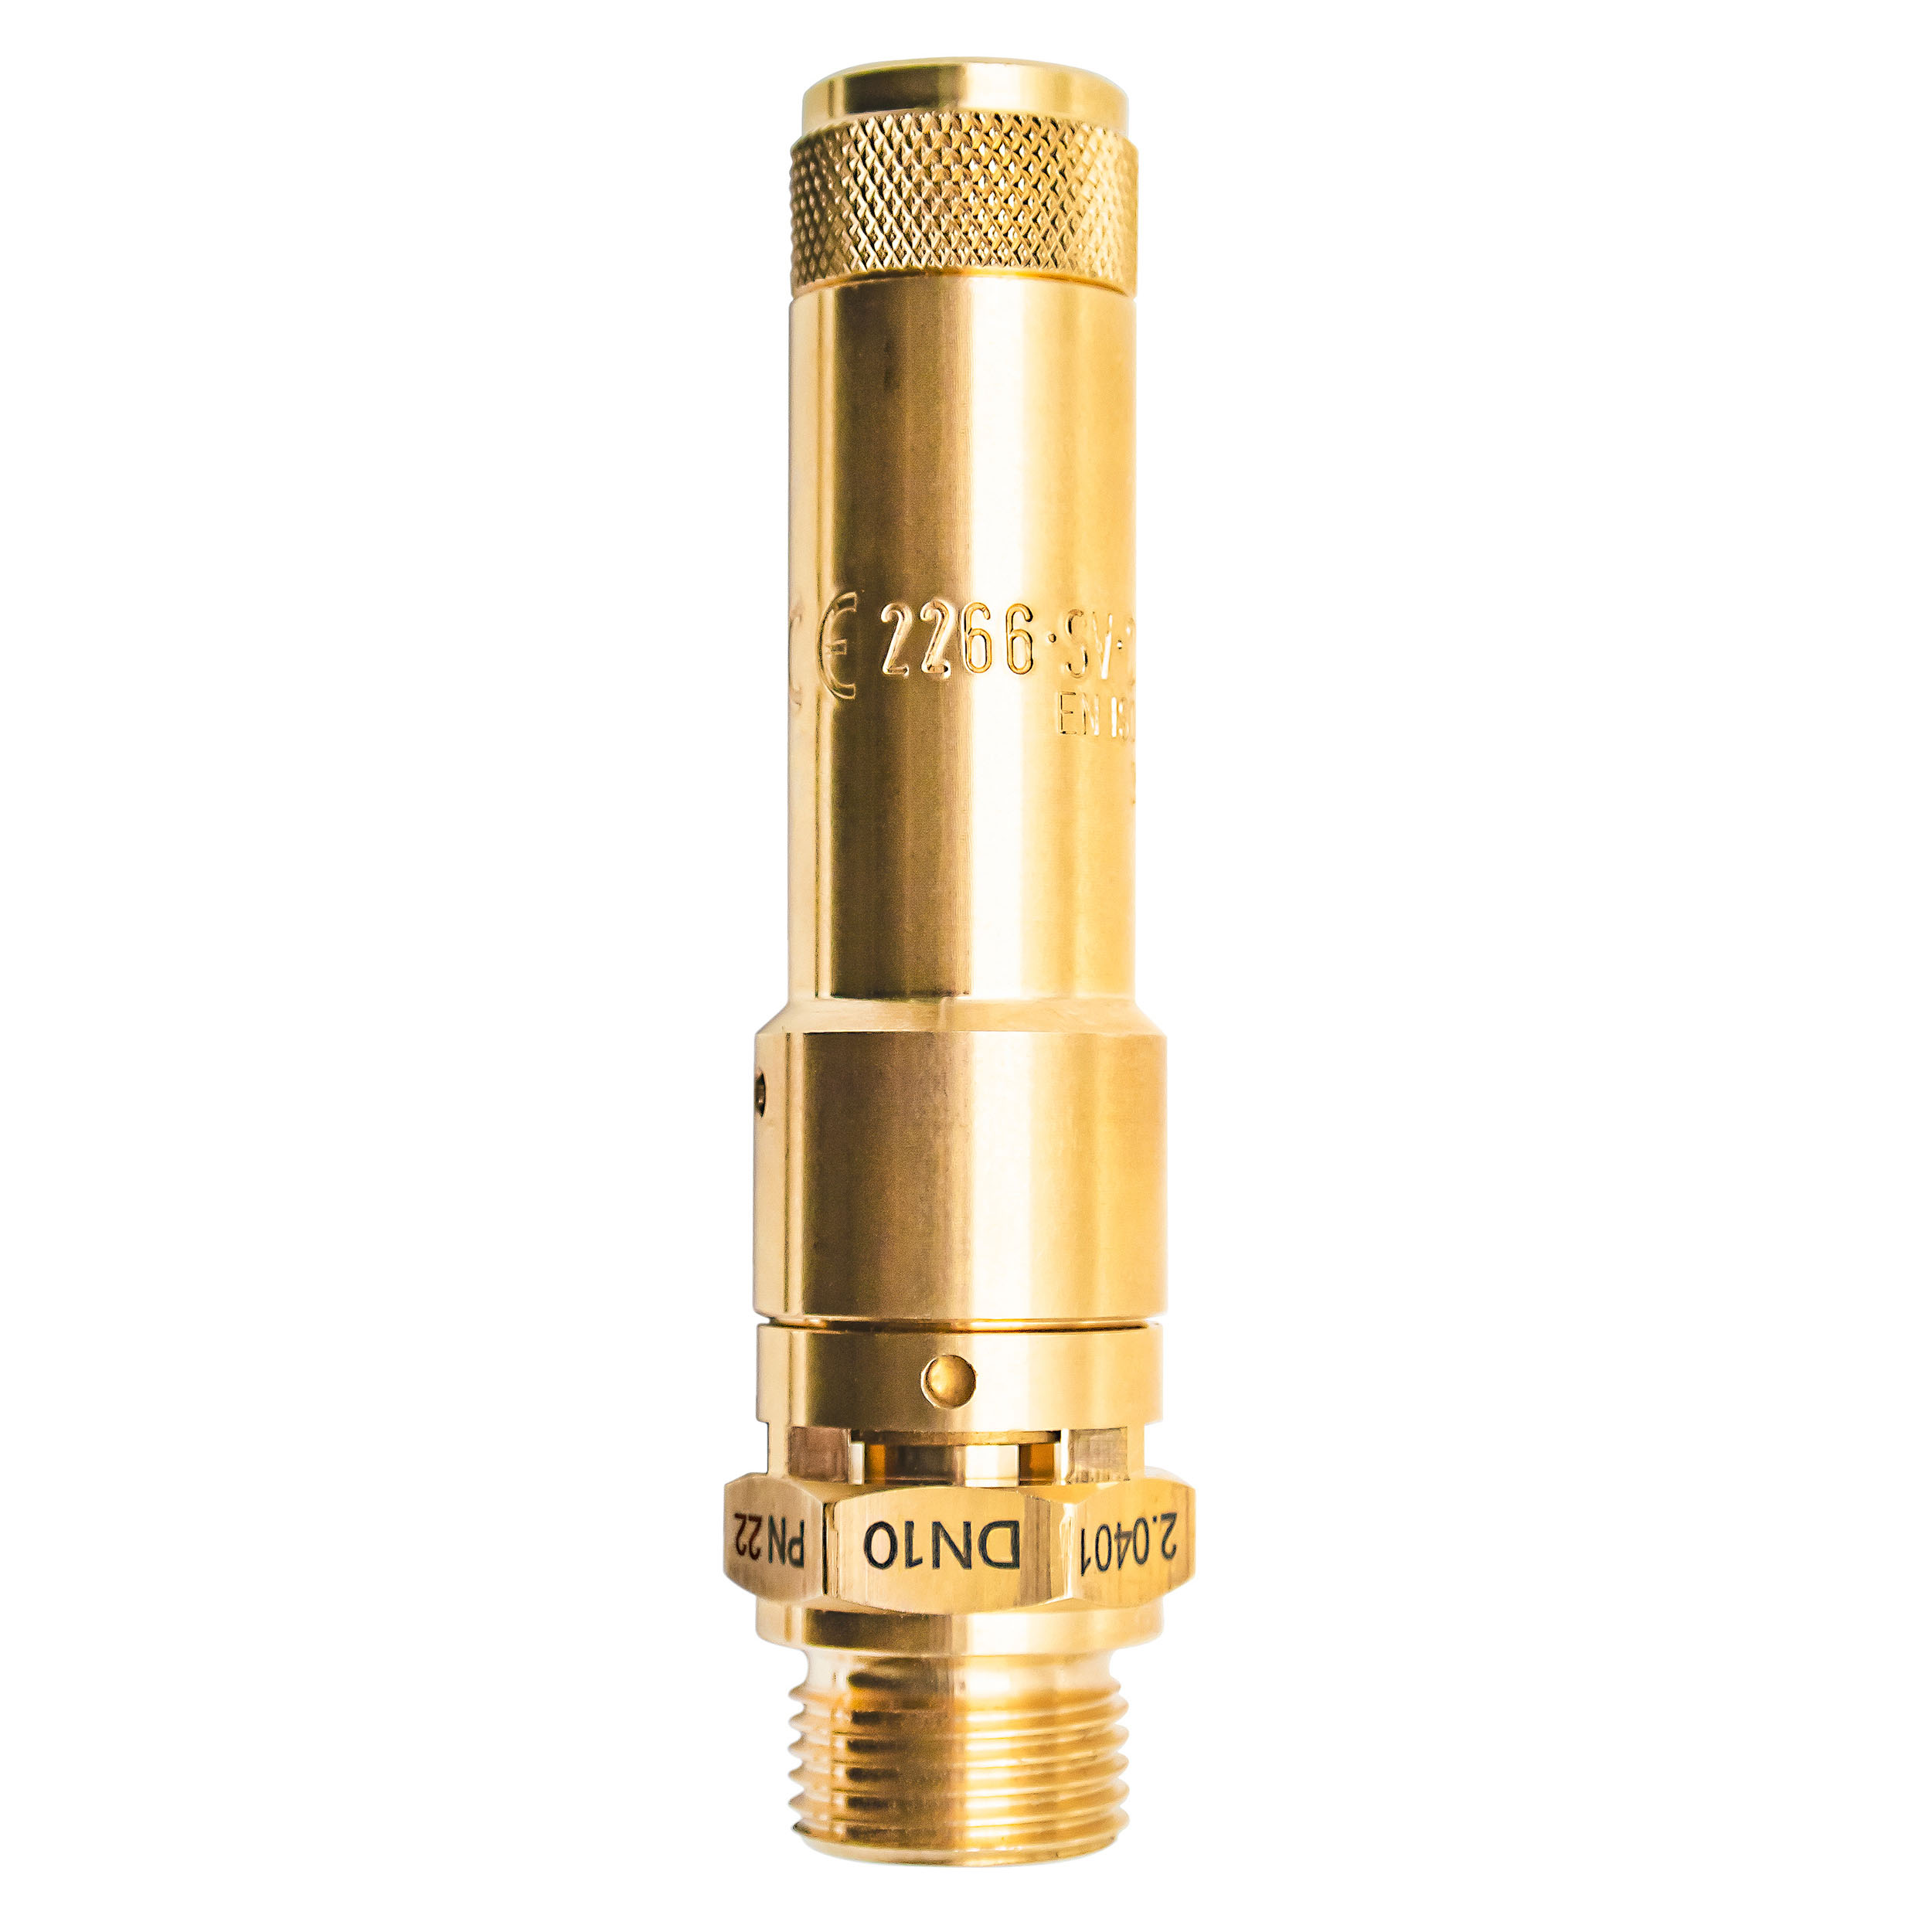 Component-tested safety valve DN 10, G½, pressure: 3.7-5 bar